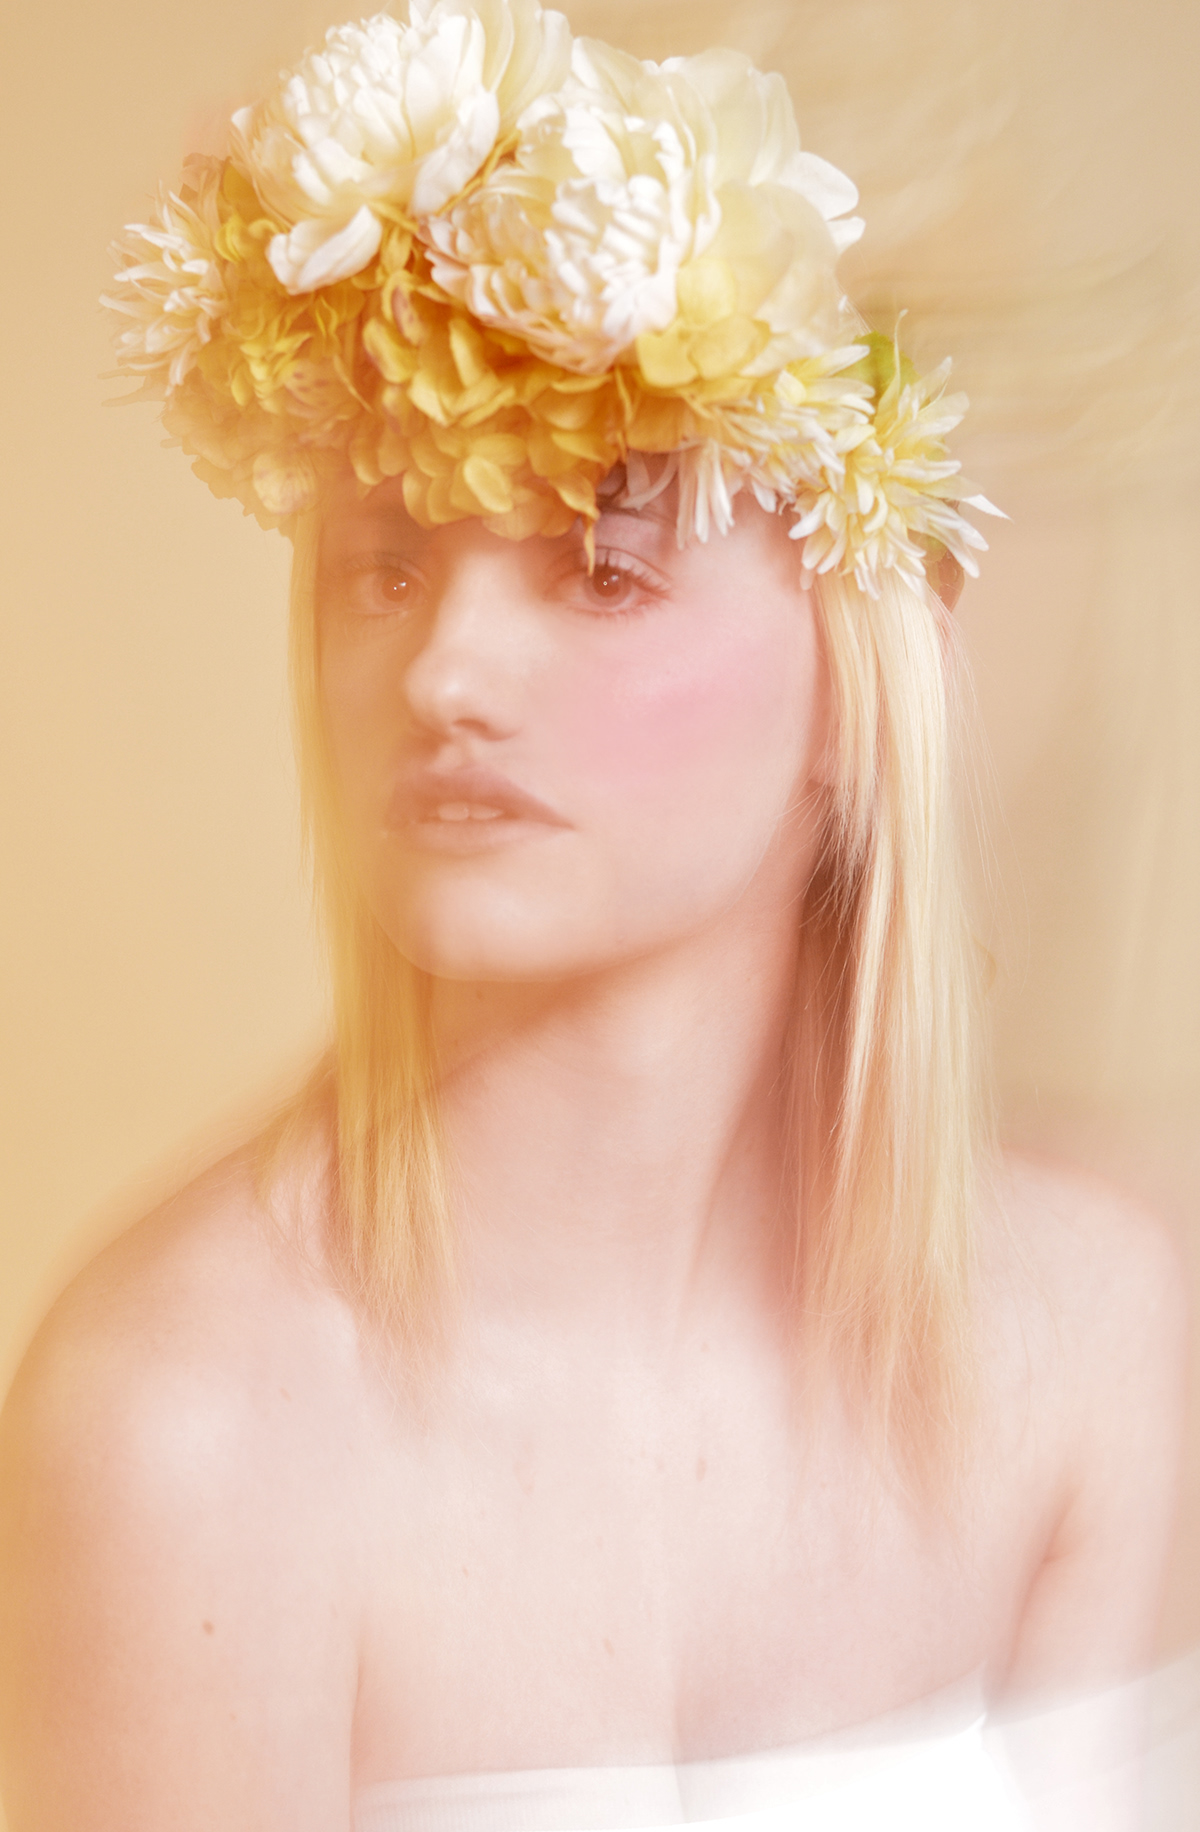 model beauty makeup eyes black and white studio colorad denver portrait headpiece floral wilhelmina